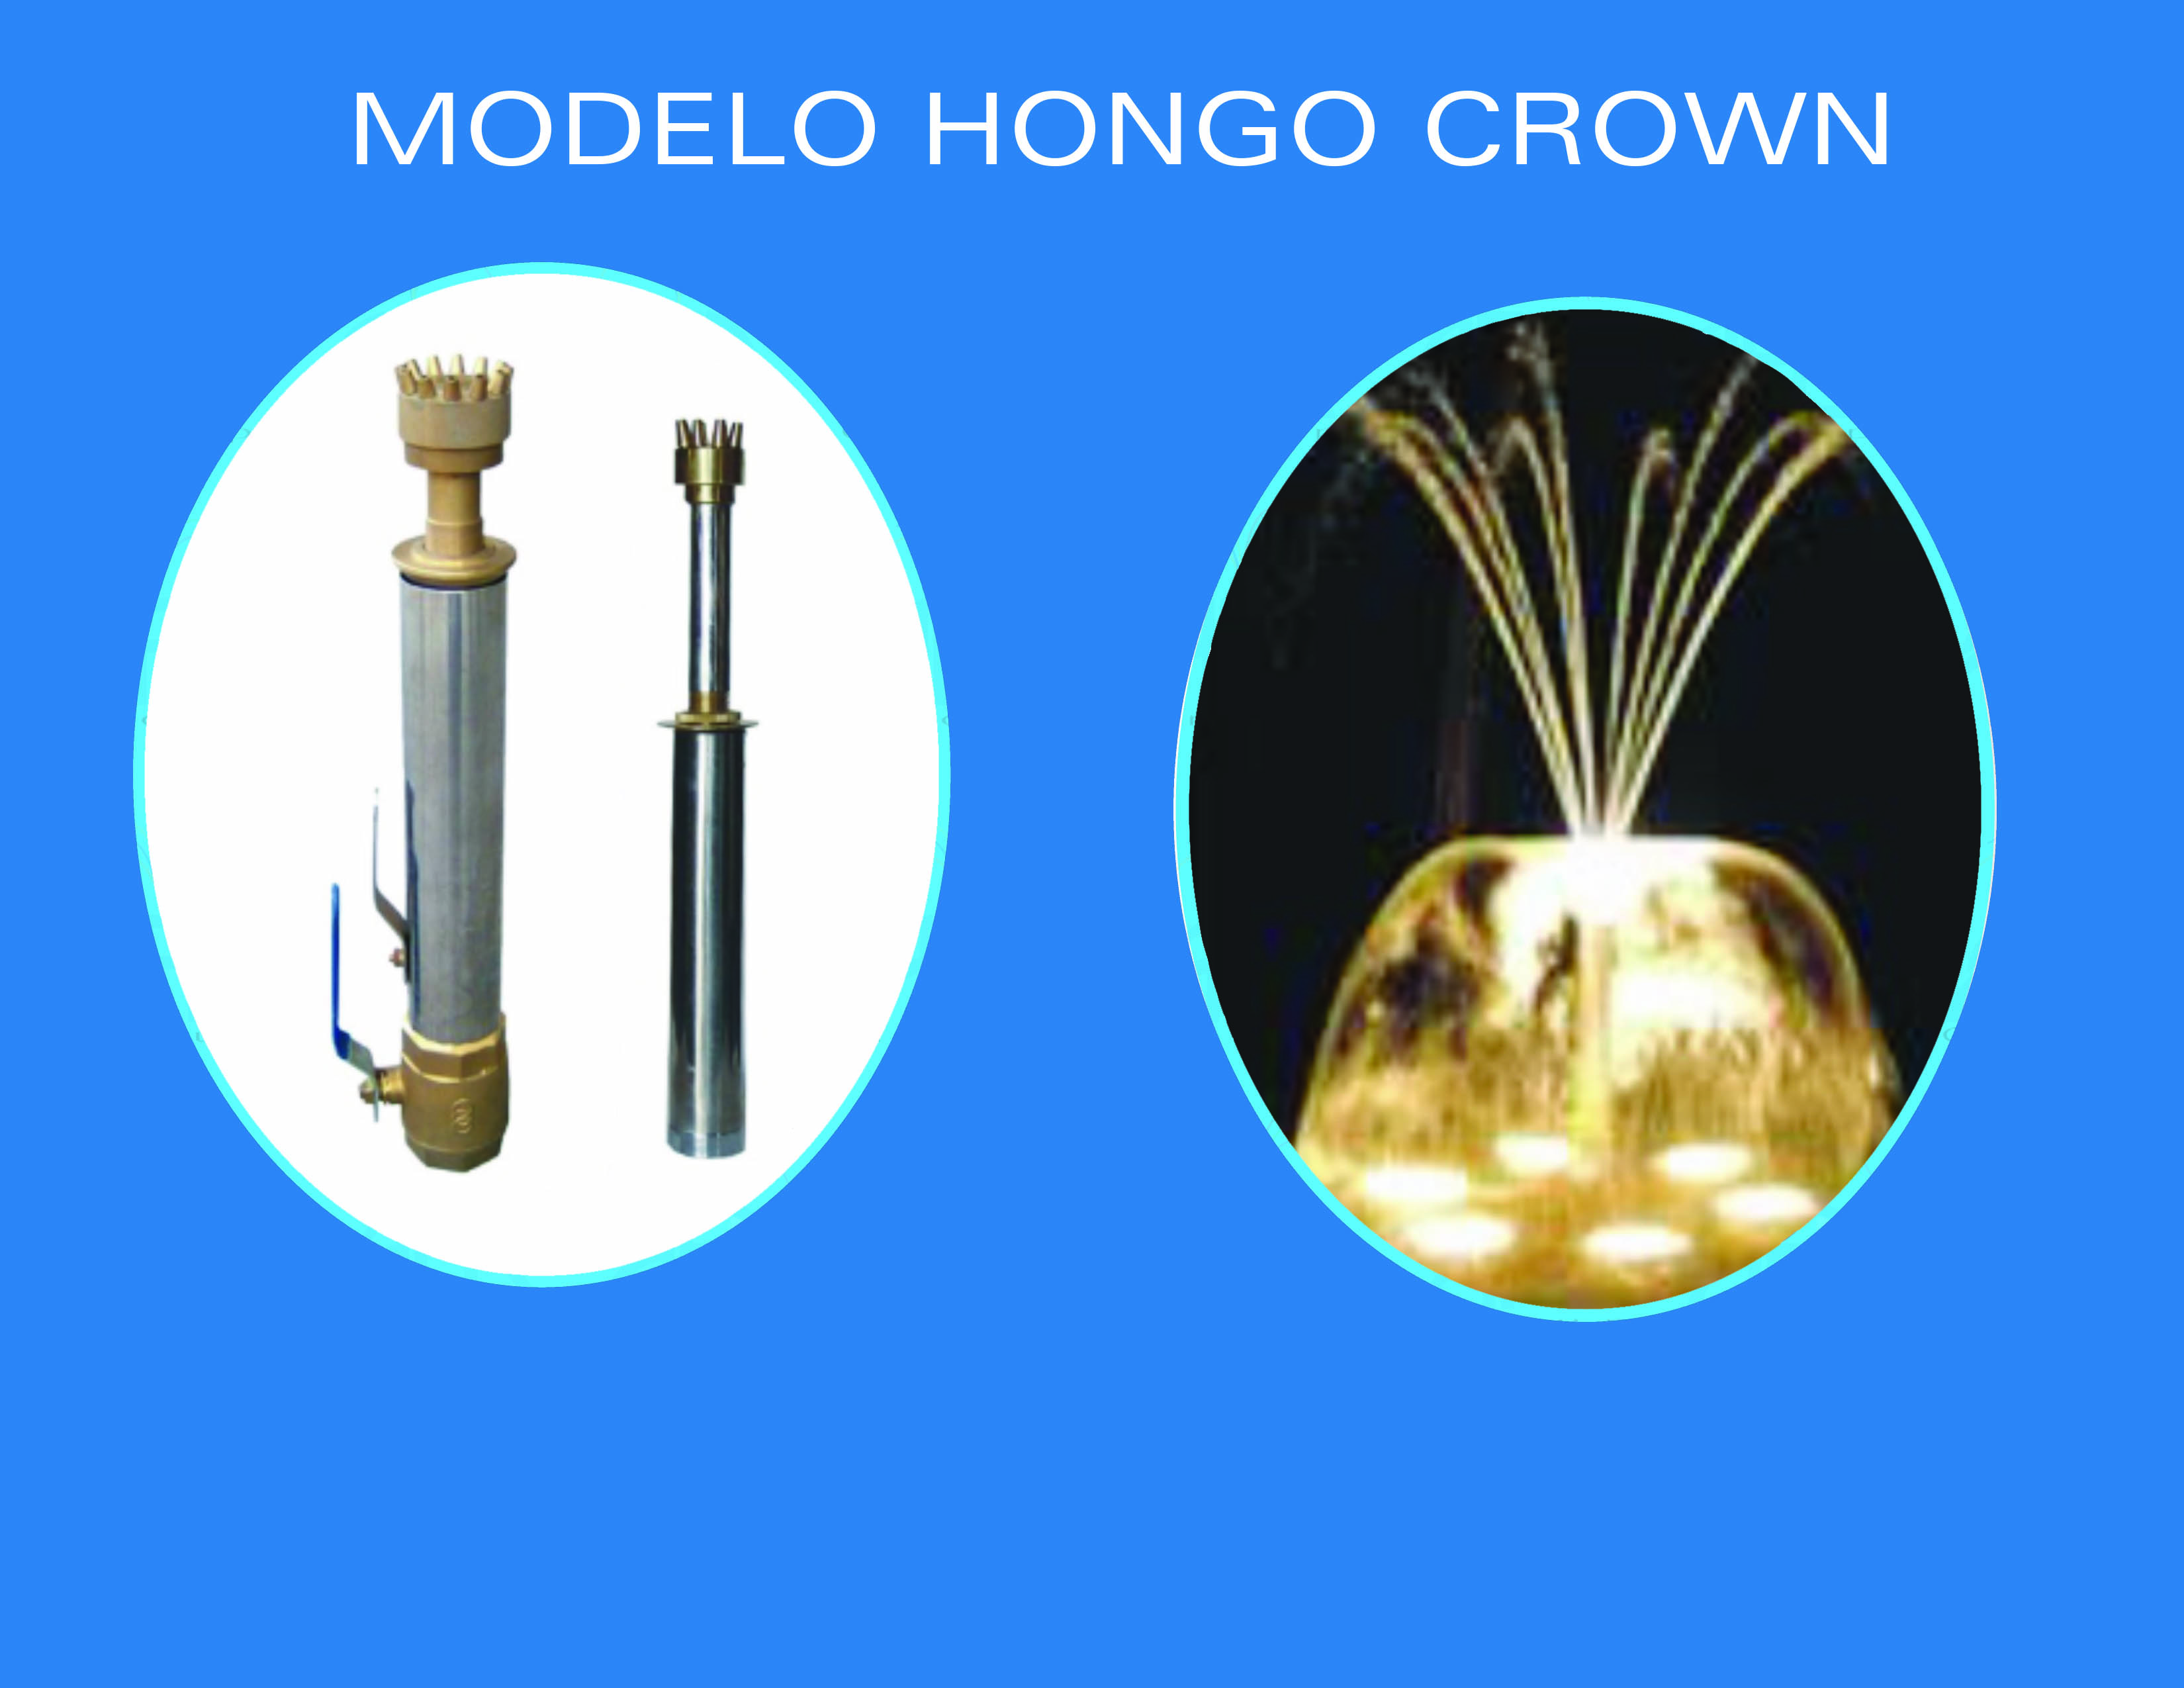 Modelo Hongo Crown